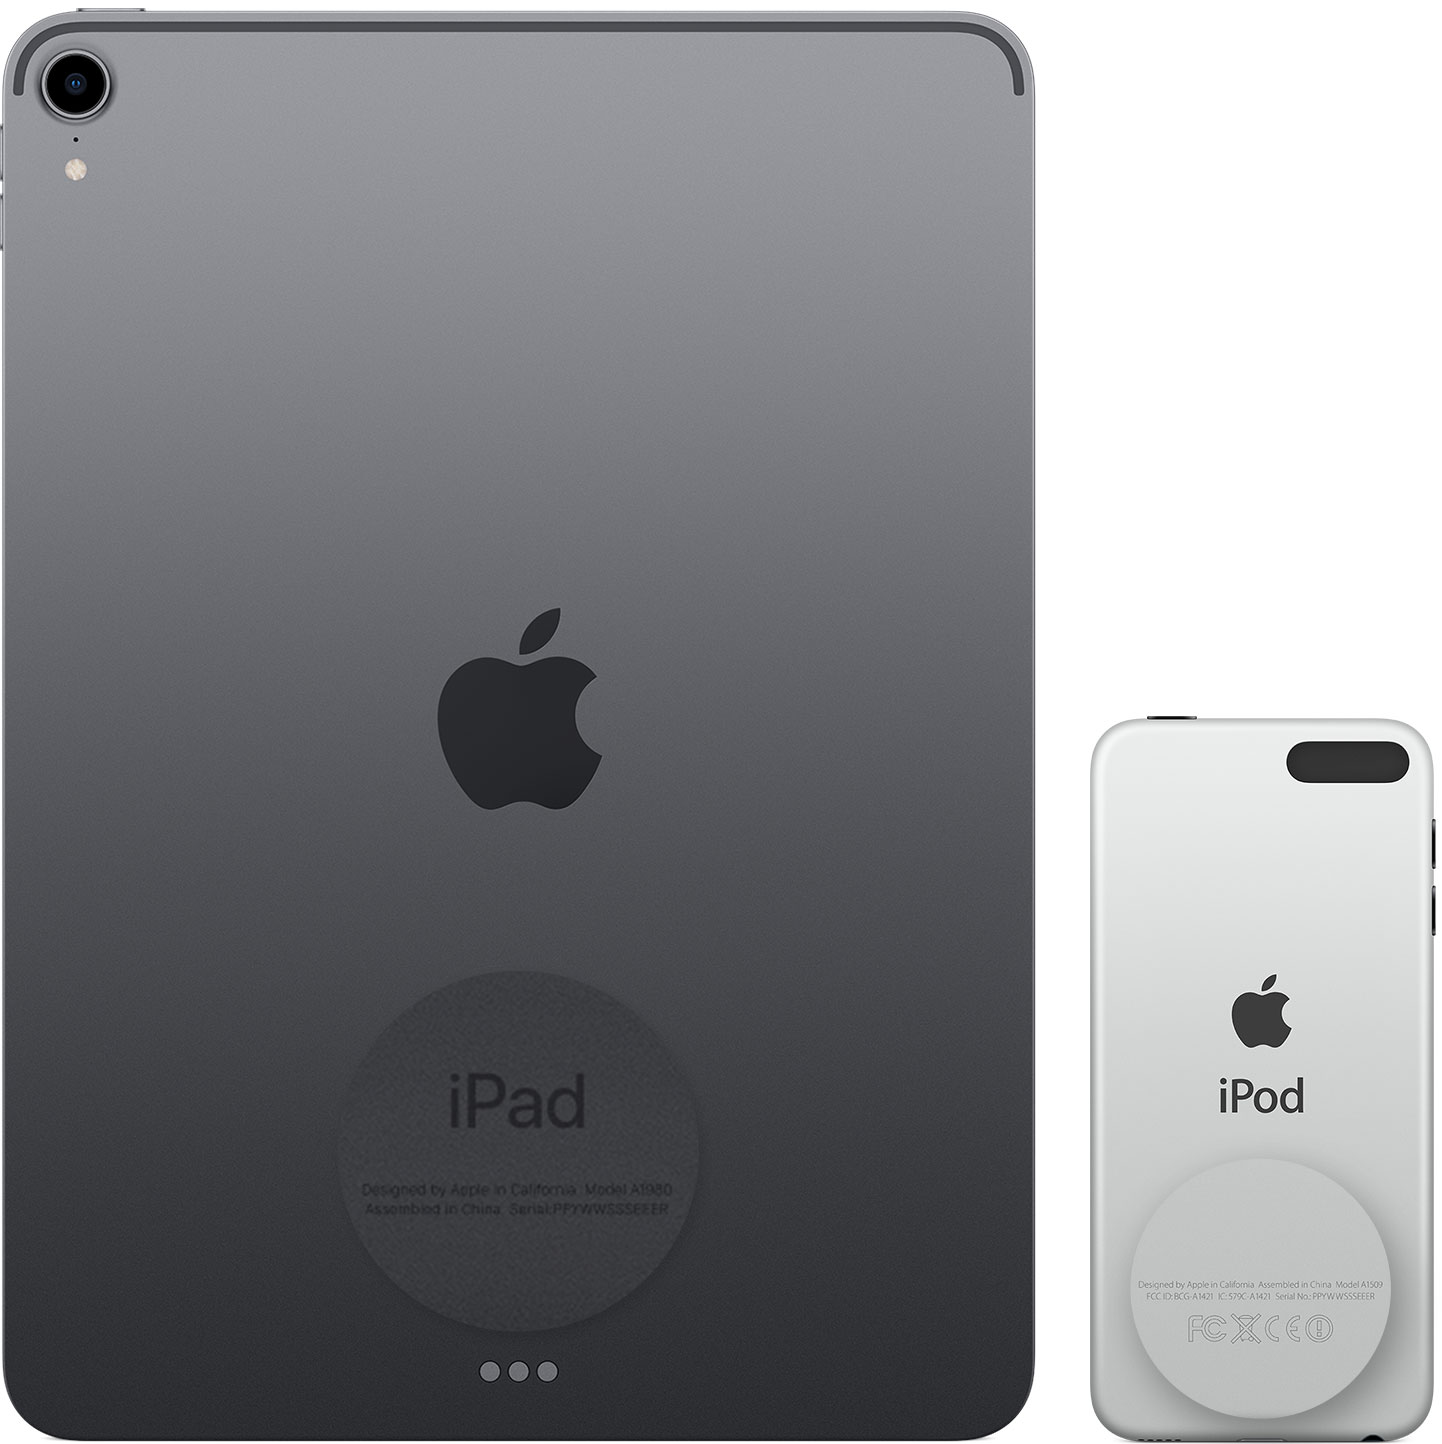 Gambar menampilkan bagian belakang iPad dan iPod touch